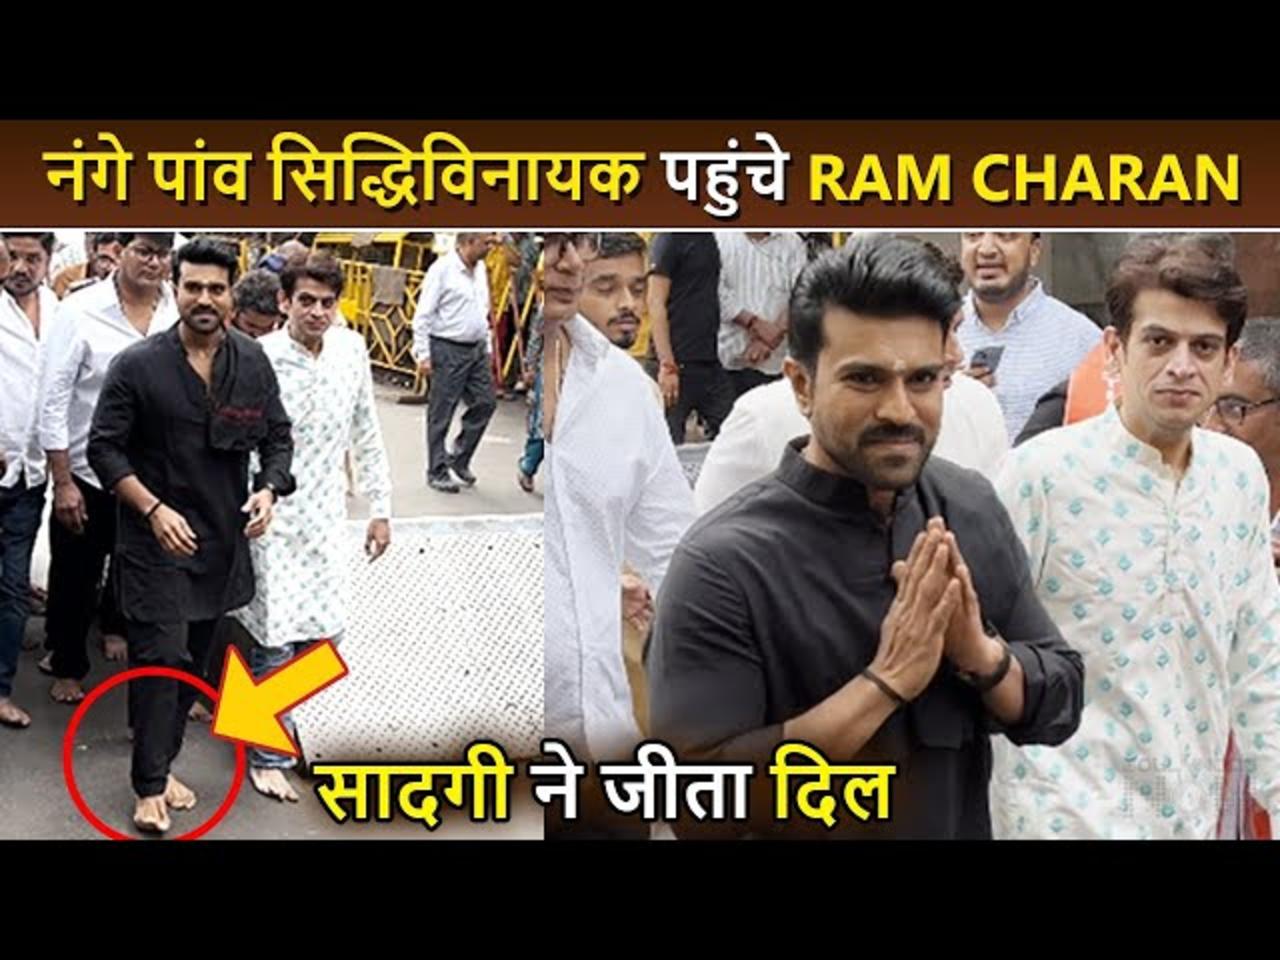 Megastar Ram Charan Visits Siddhivinayak Barefoot, Wins All Hearts With Simplicity